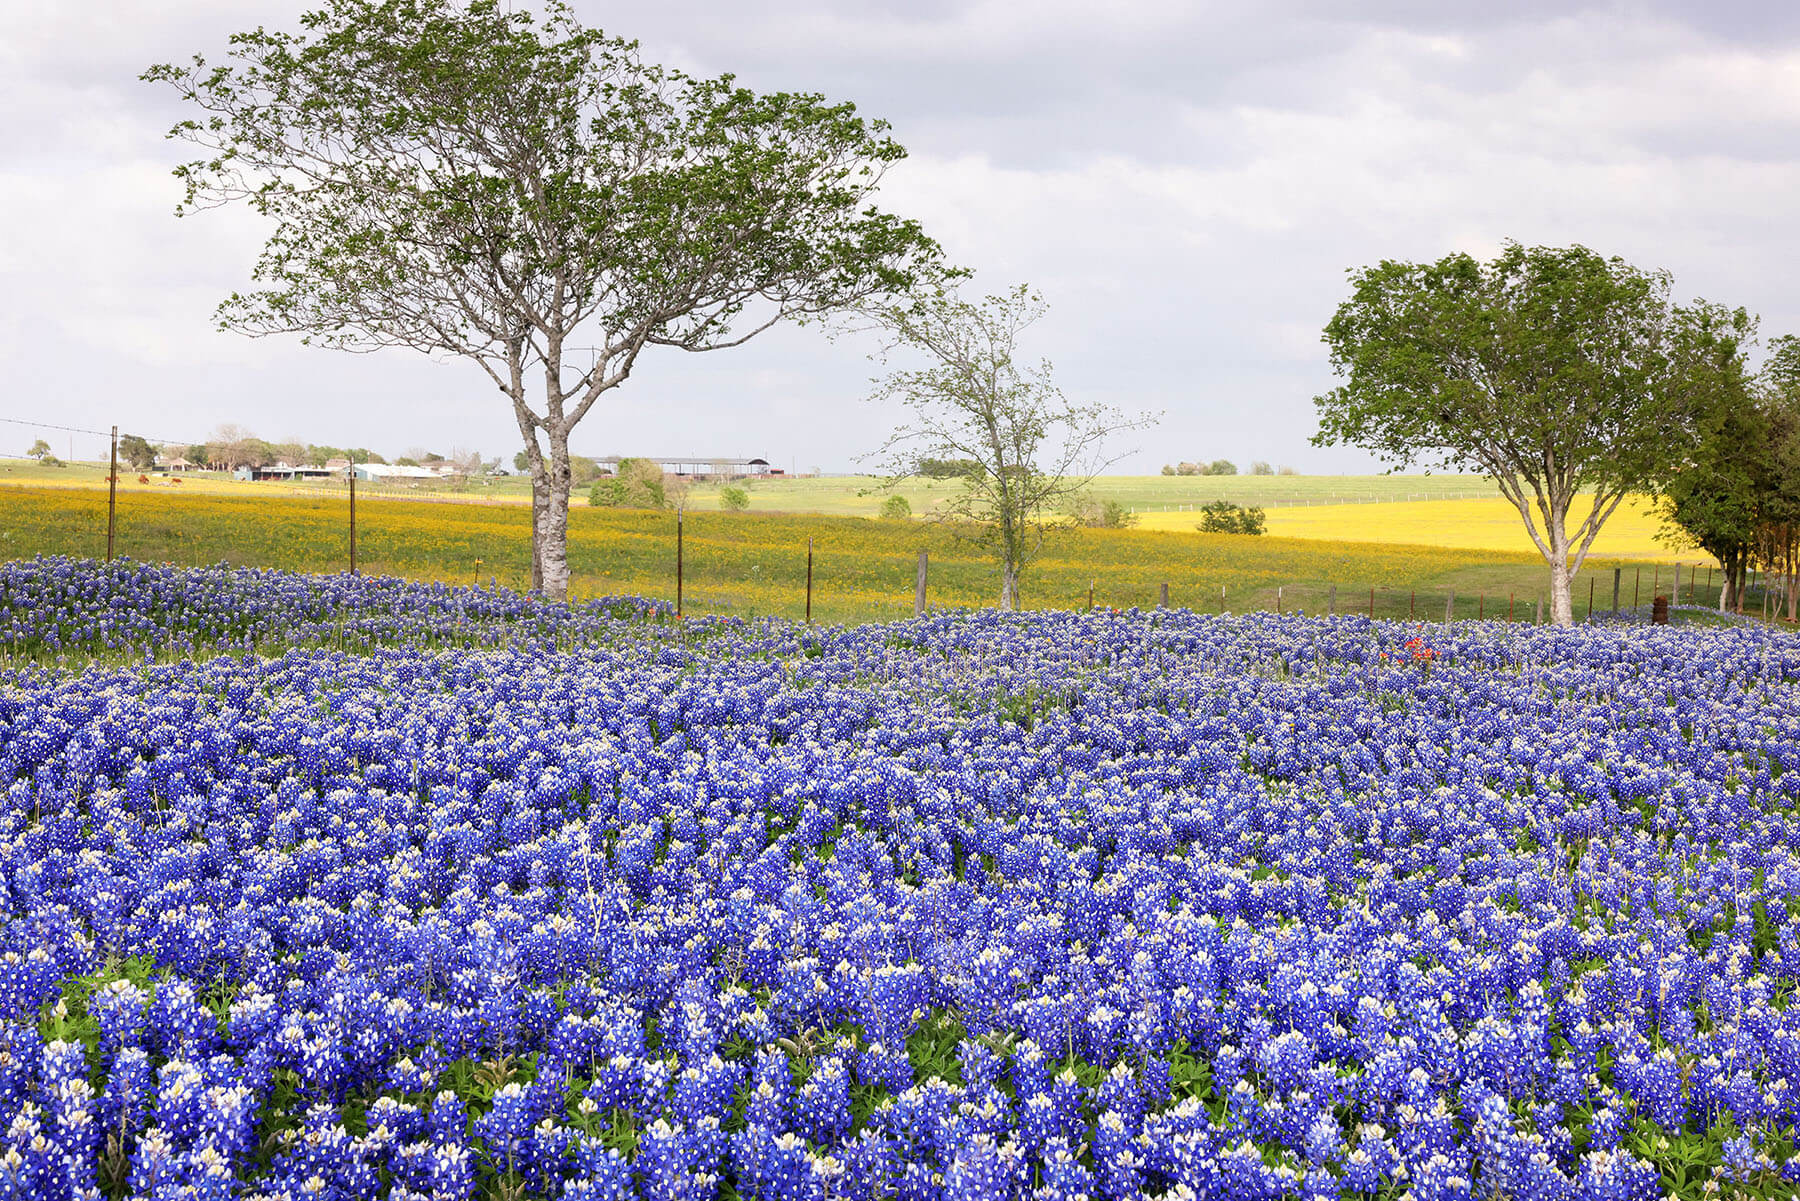 A large field with hundreds of bluebonnets under gray sky